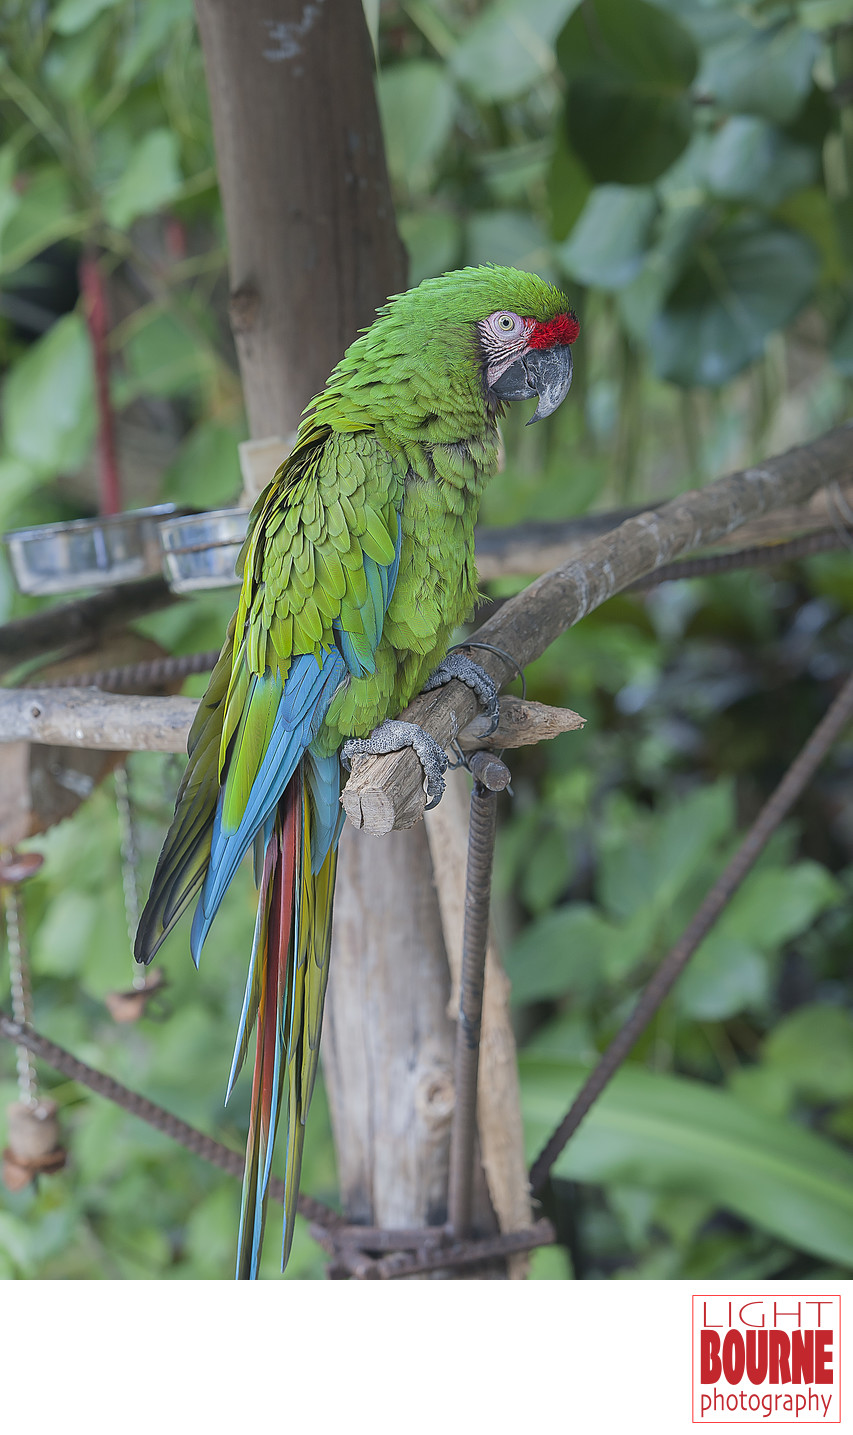 Parrot, Nassau Bahamas Ardastra Zoo and Garden